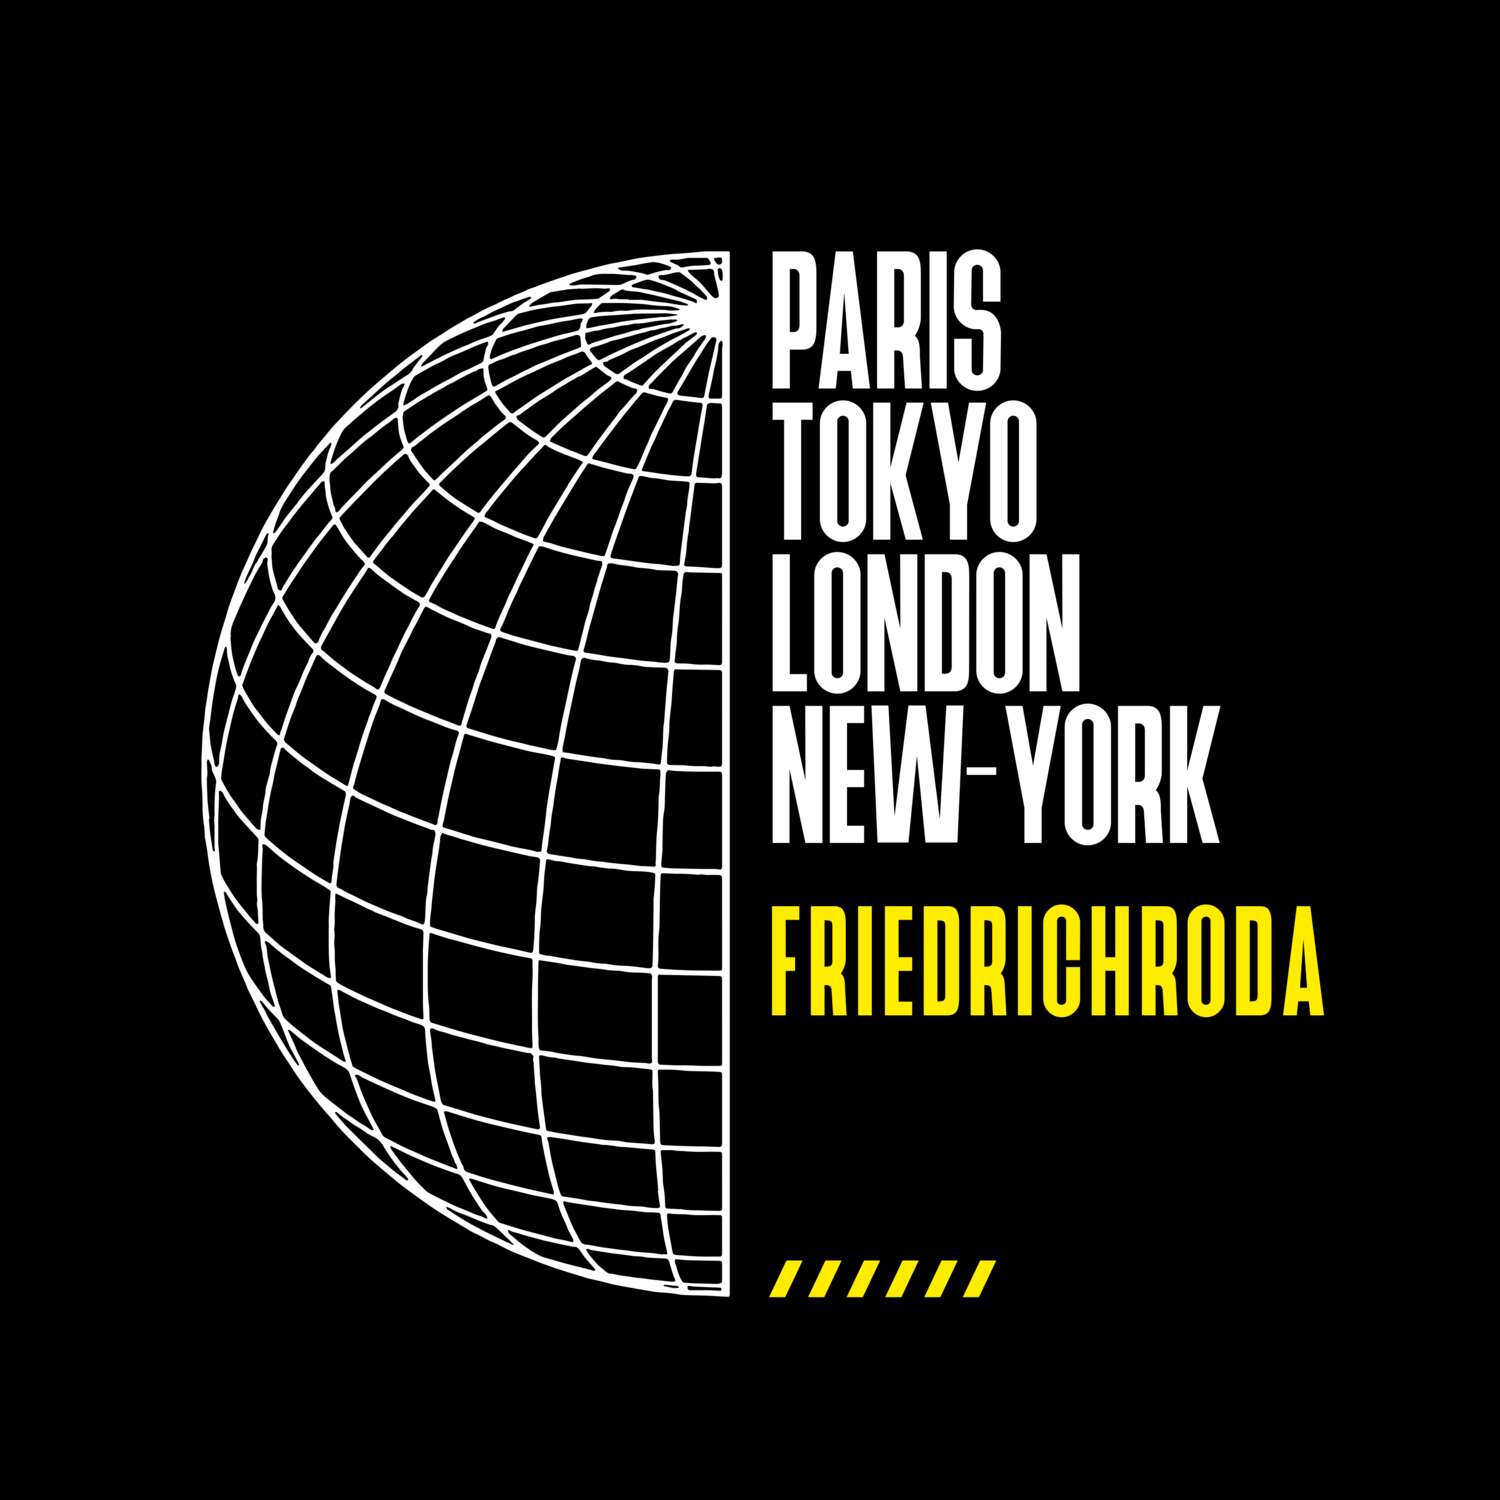 Friedrichroda T-Shirt »Paris Tokyo London«